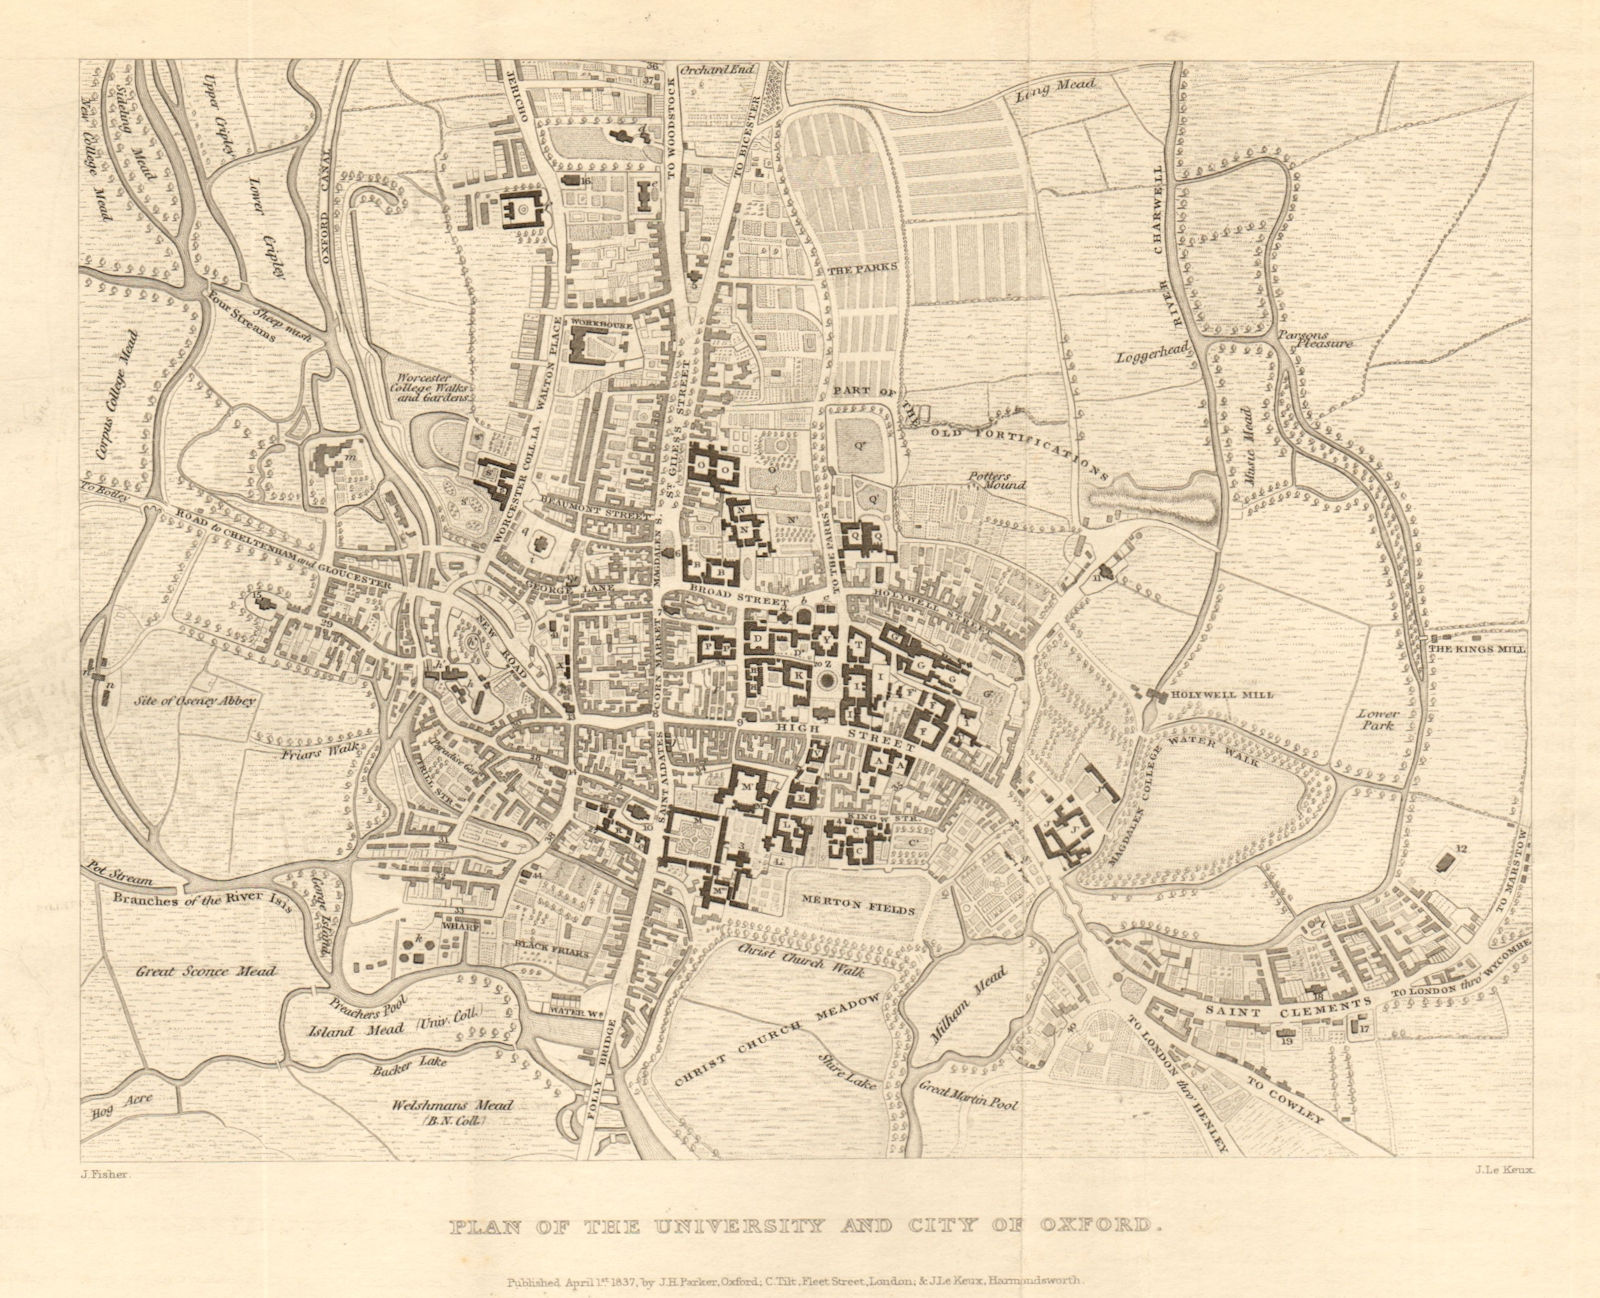 "Plan of the University & City of Oxford". Town plan by John LE KEUX 1837 map